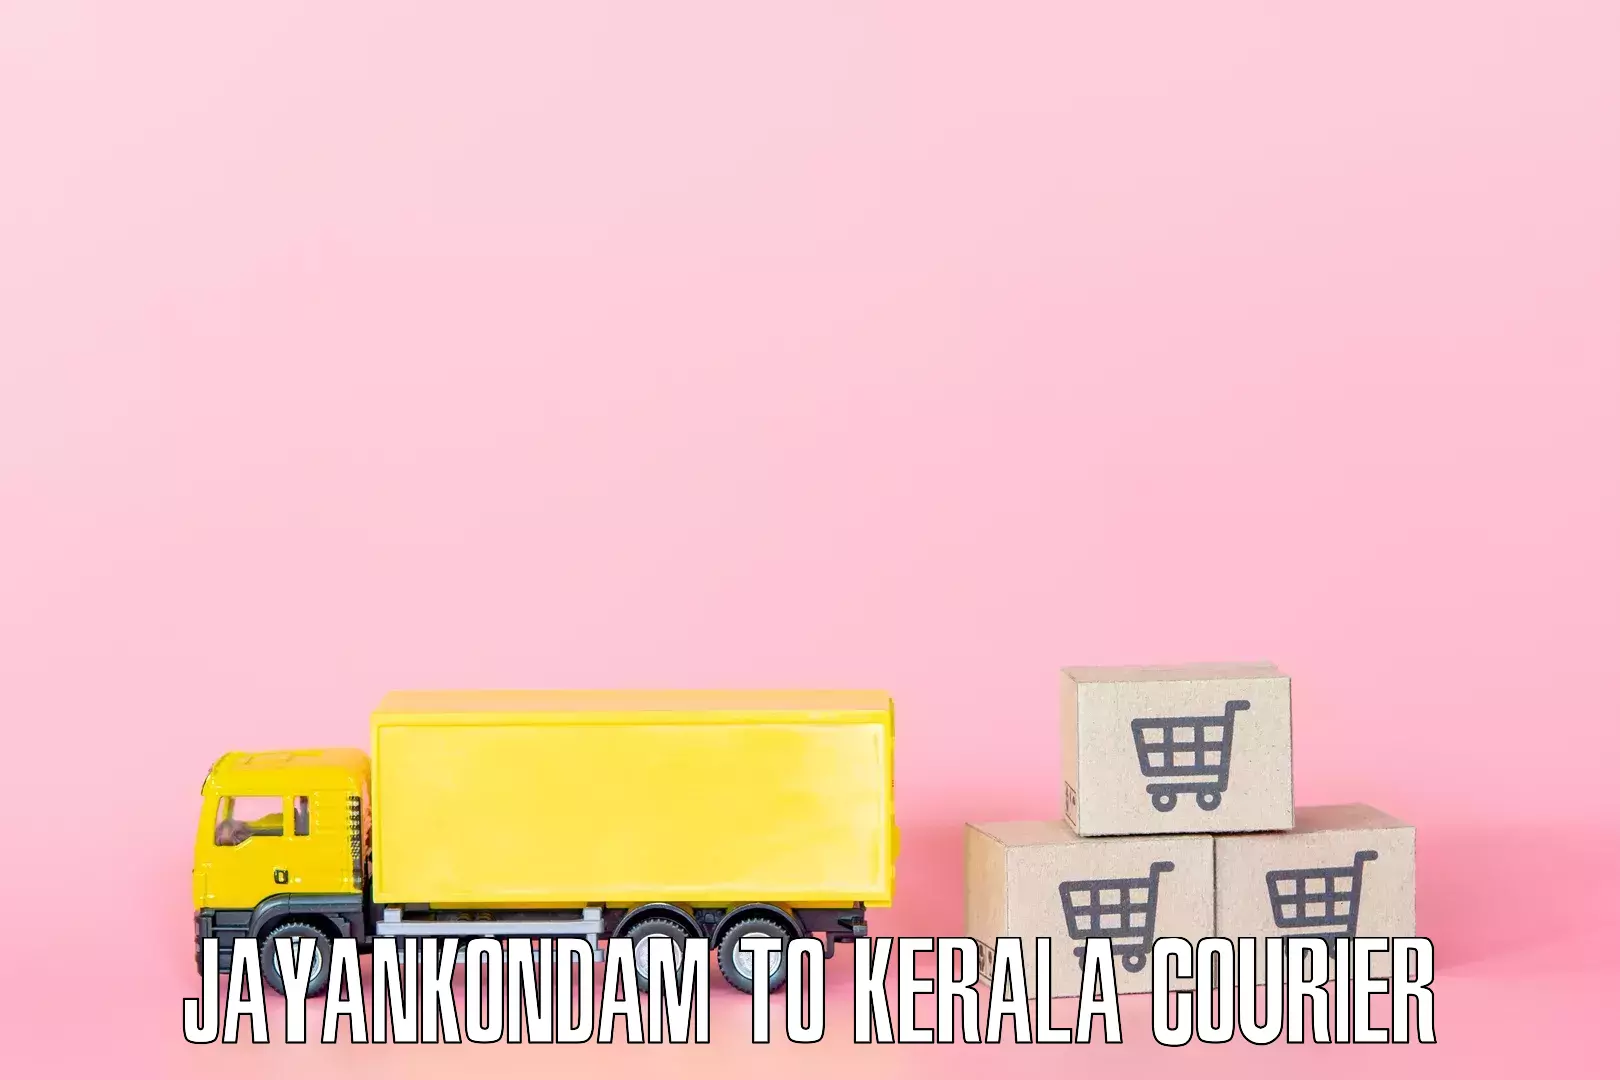 Skilled furniture transporters Jayankondam to Kerala